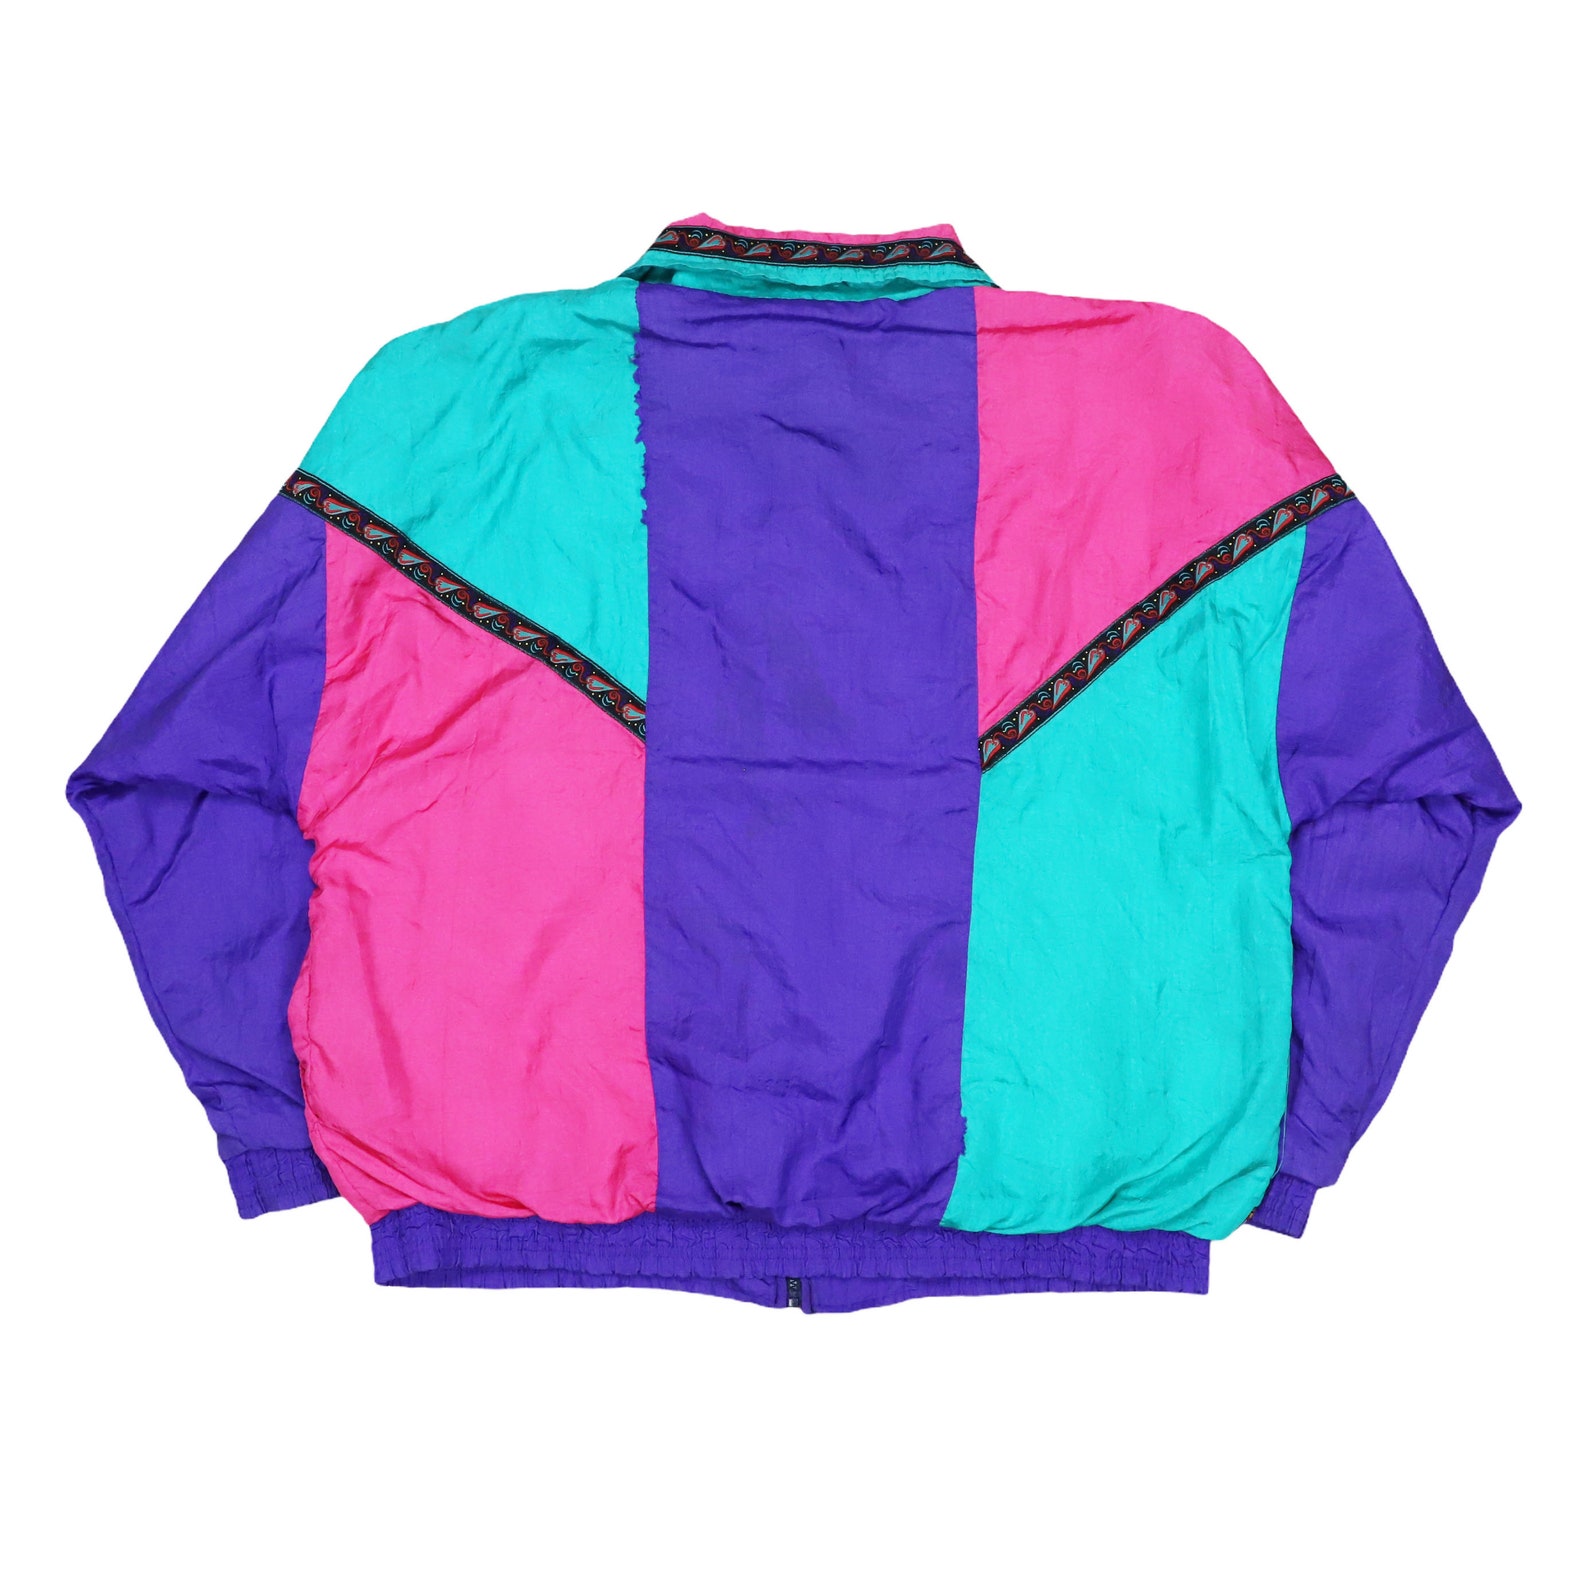 Vintage 80s 90s Windbreaker Colorful Rainbow Colorblock | Etsy